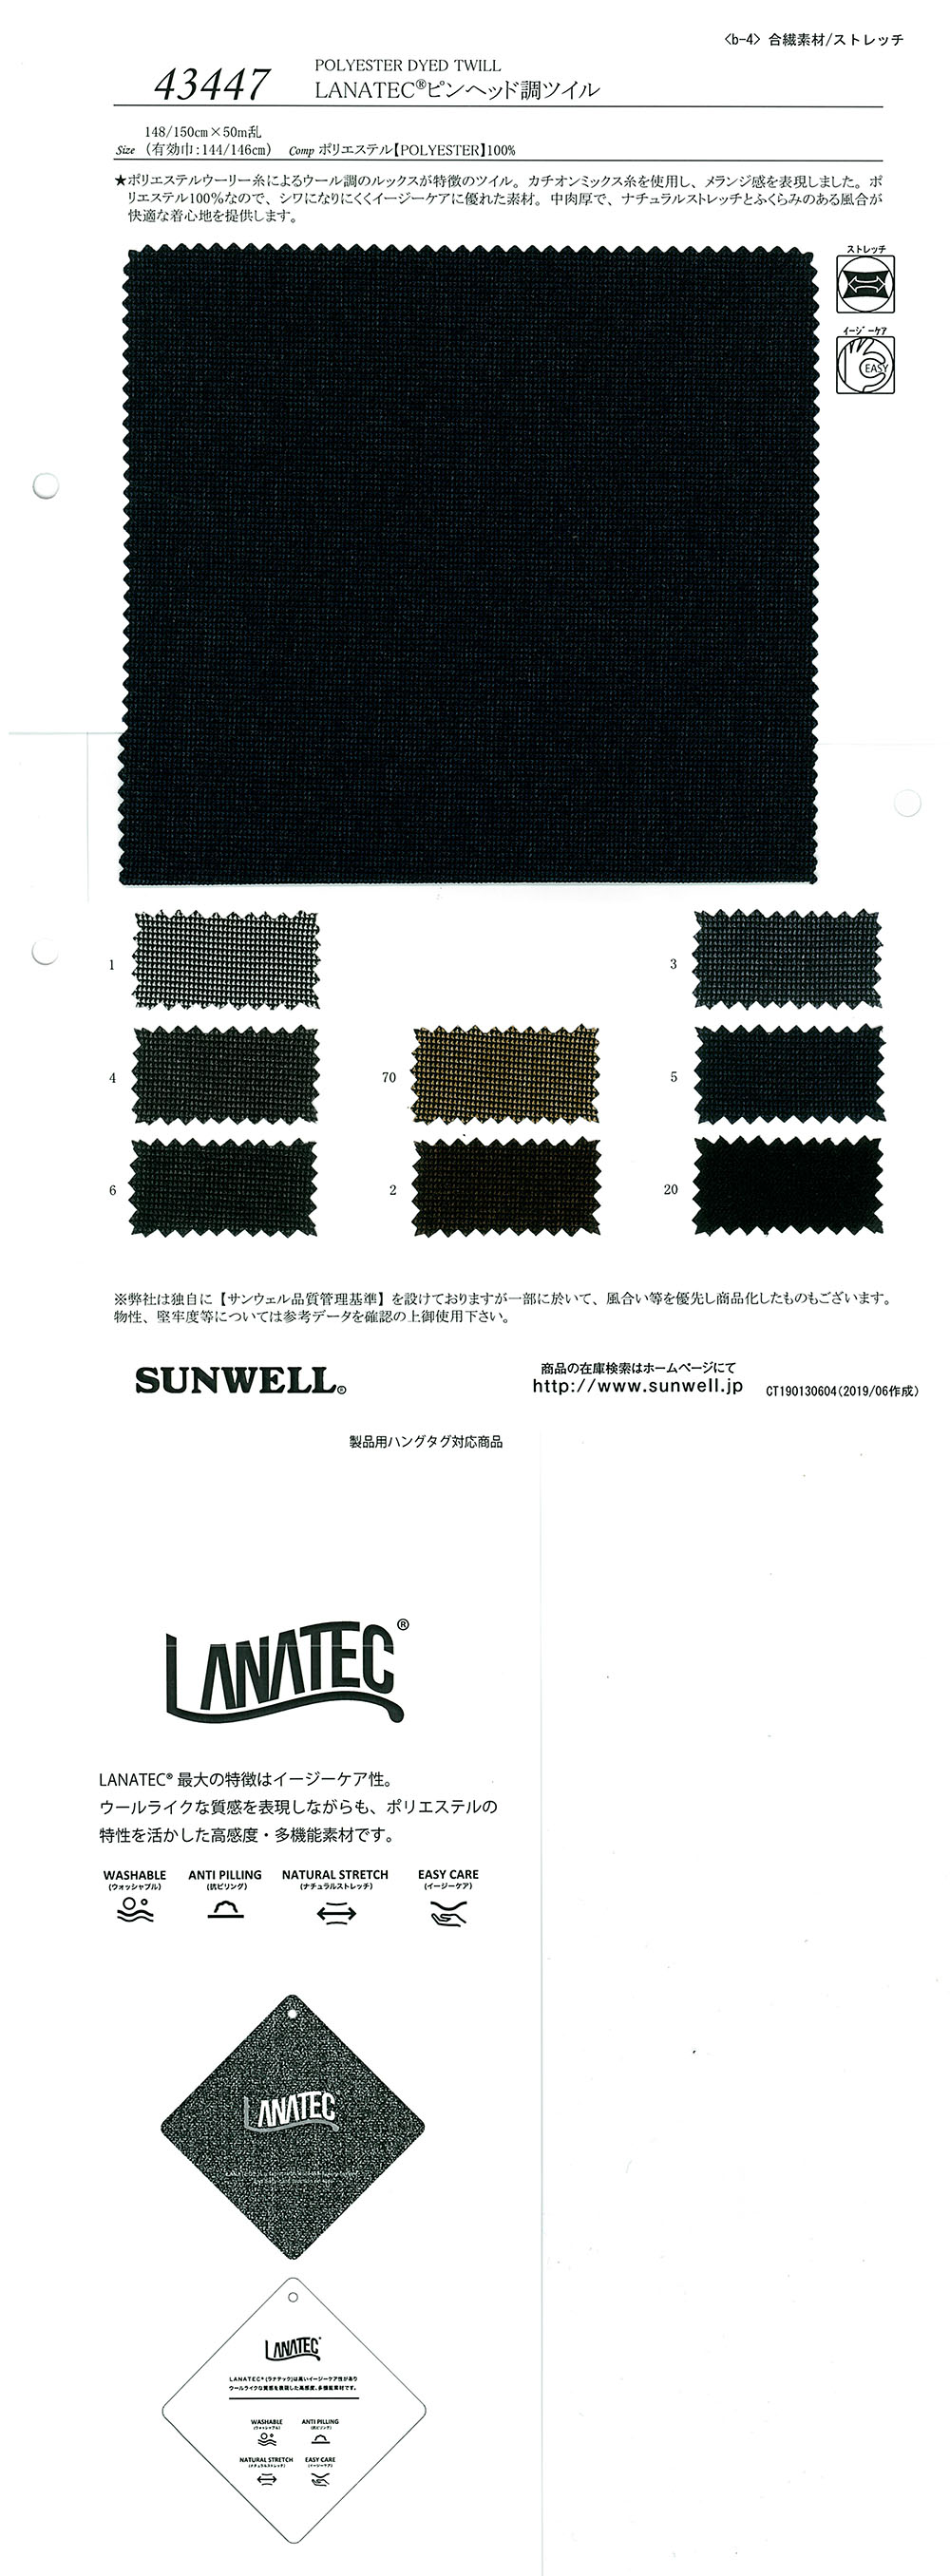 43447 LANATEC(R) Pinhead Style Twill[Textile / Fabric] SUNWELL